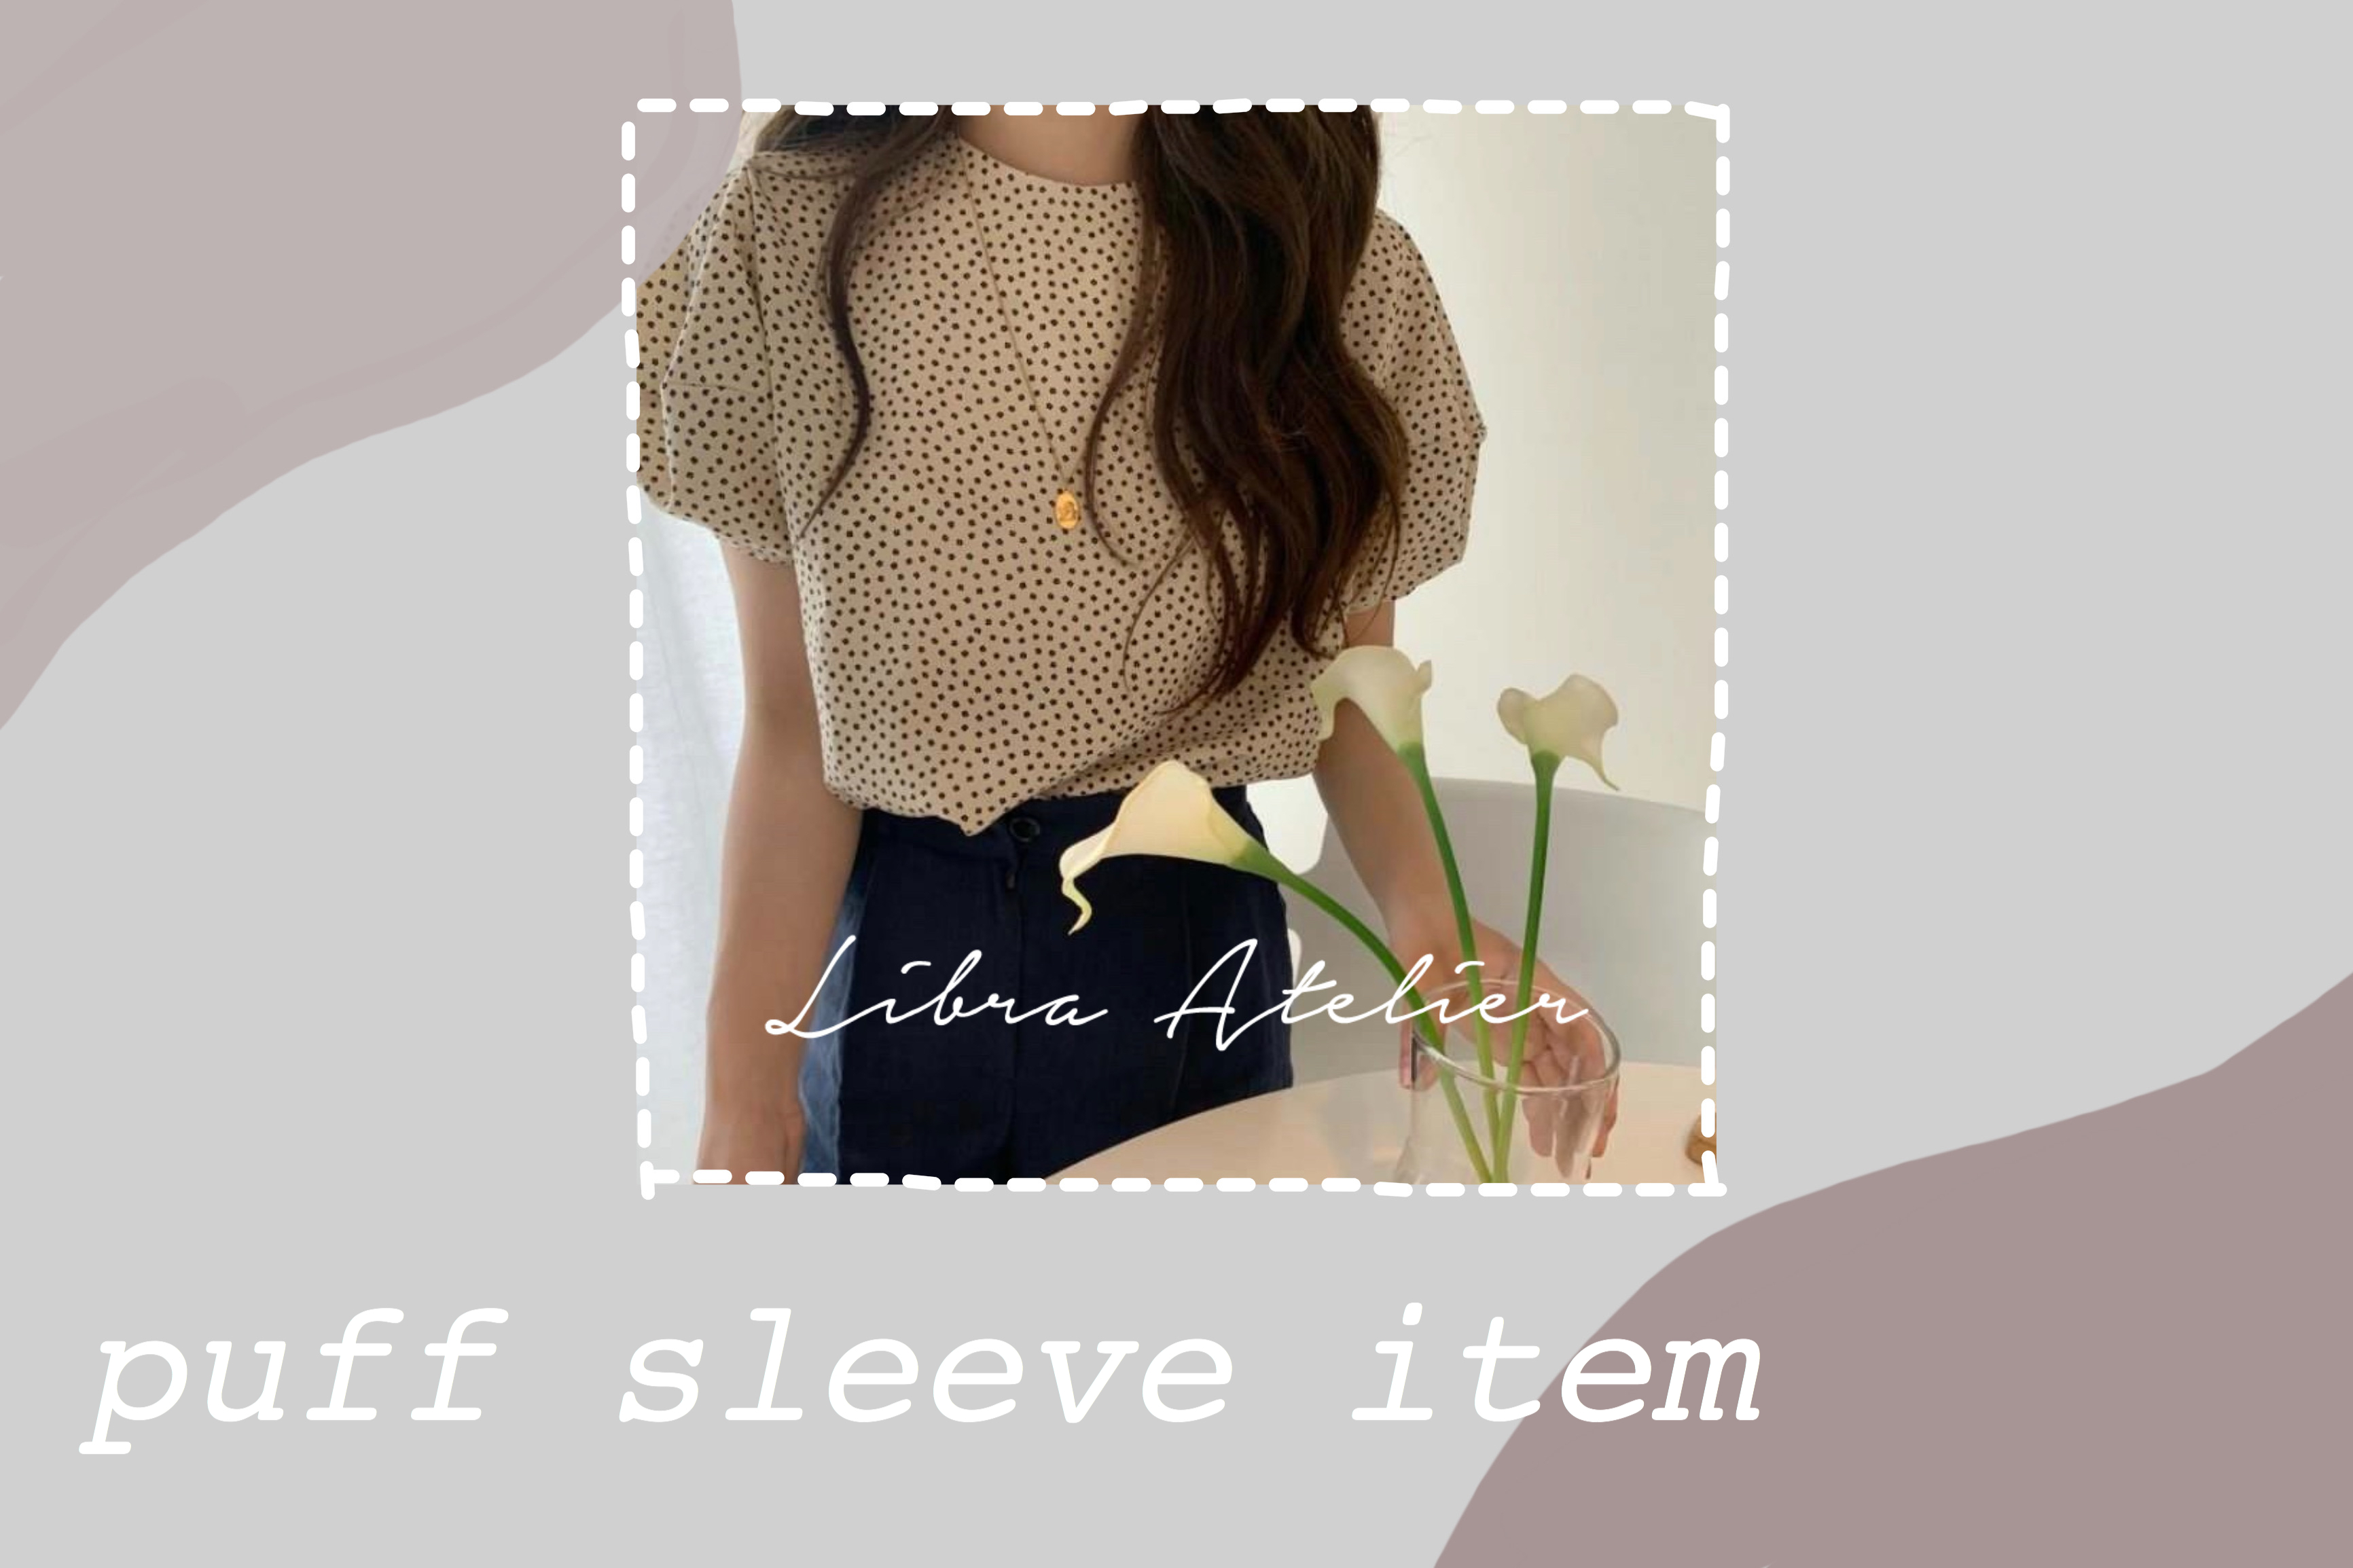 🥨puff sleeve item